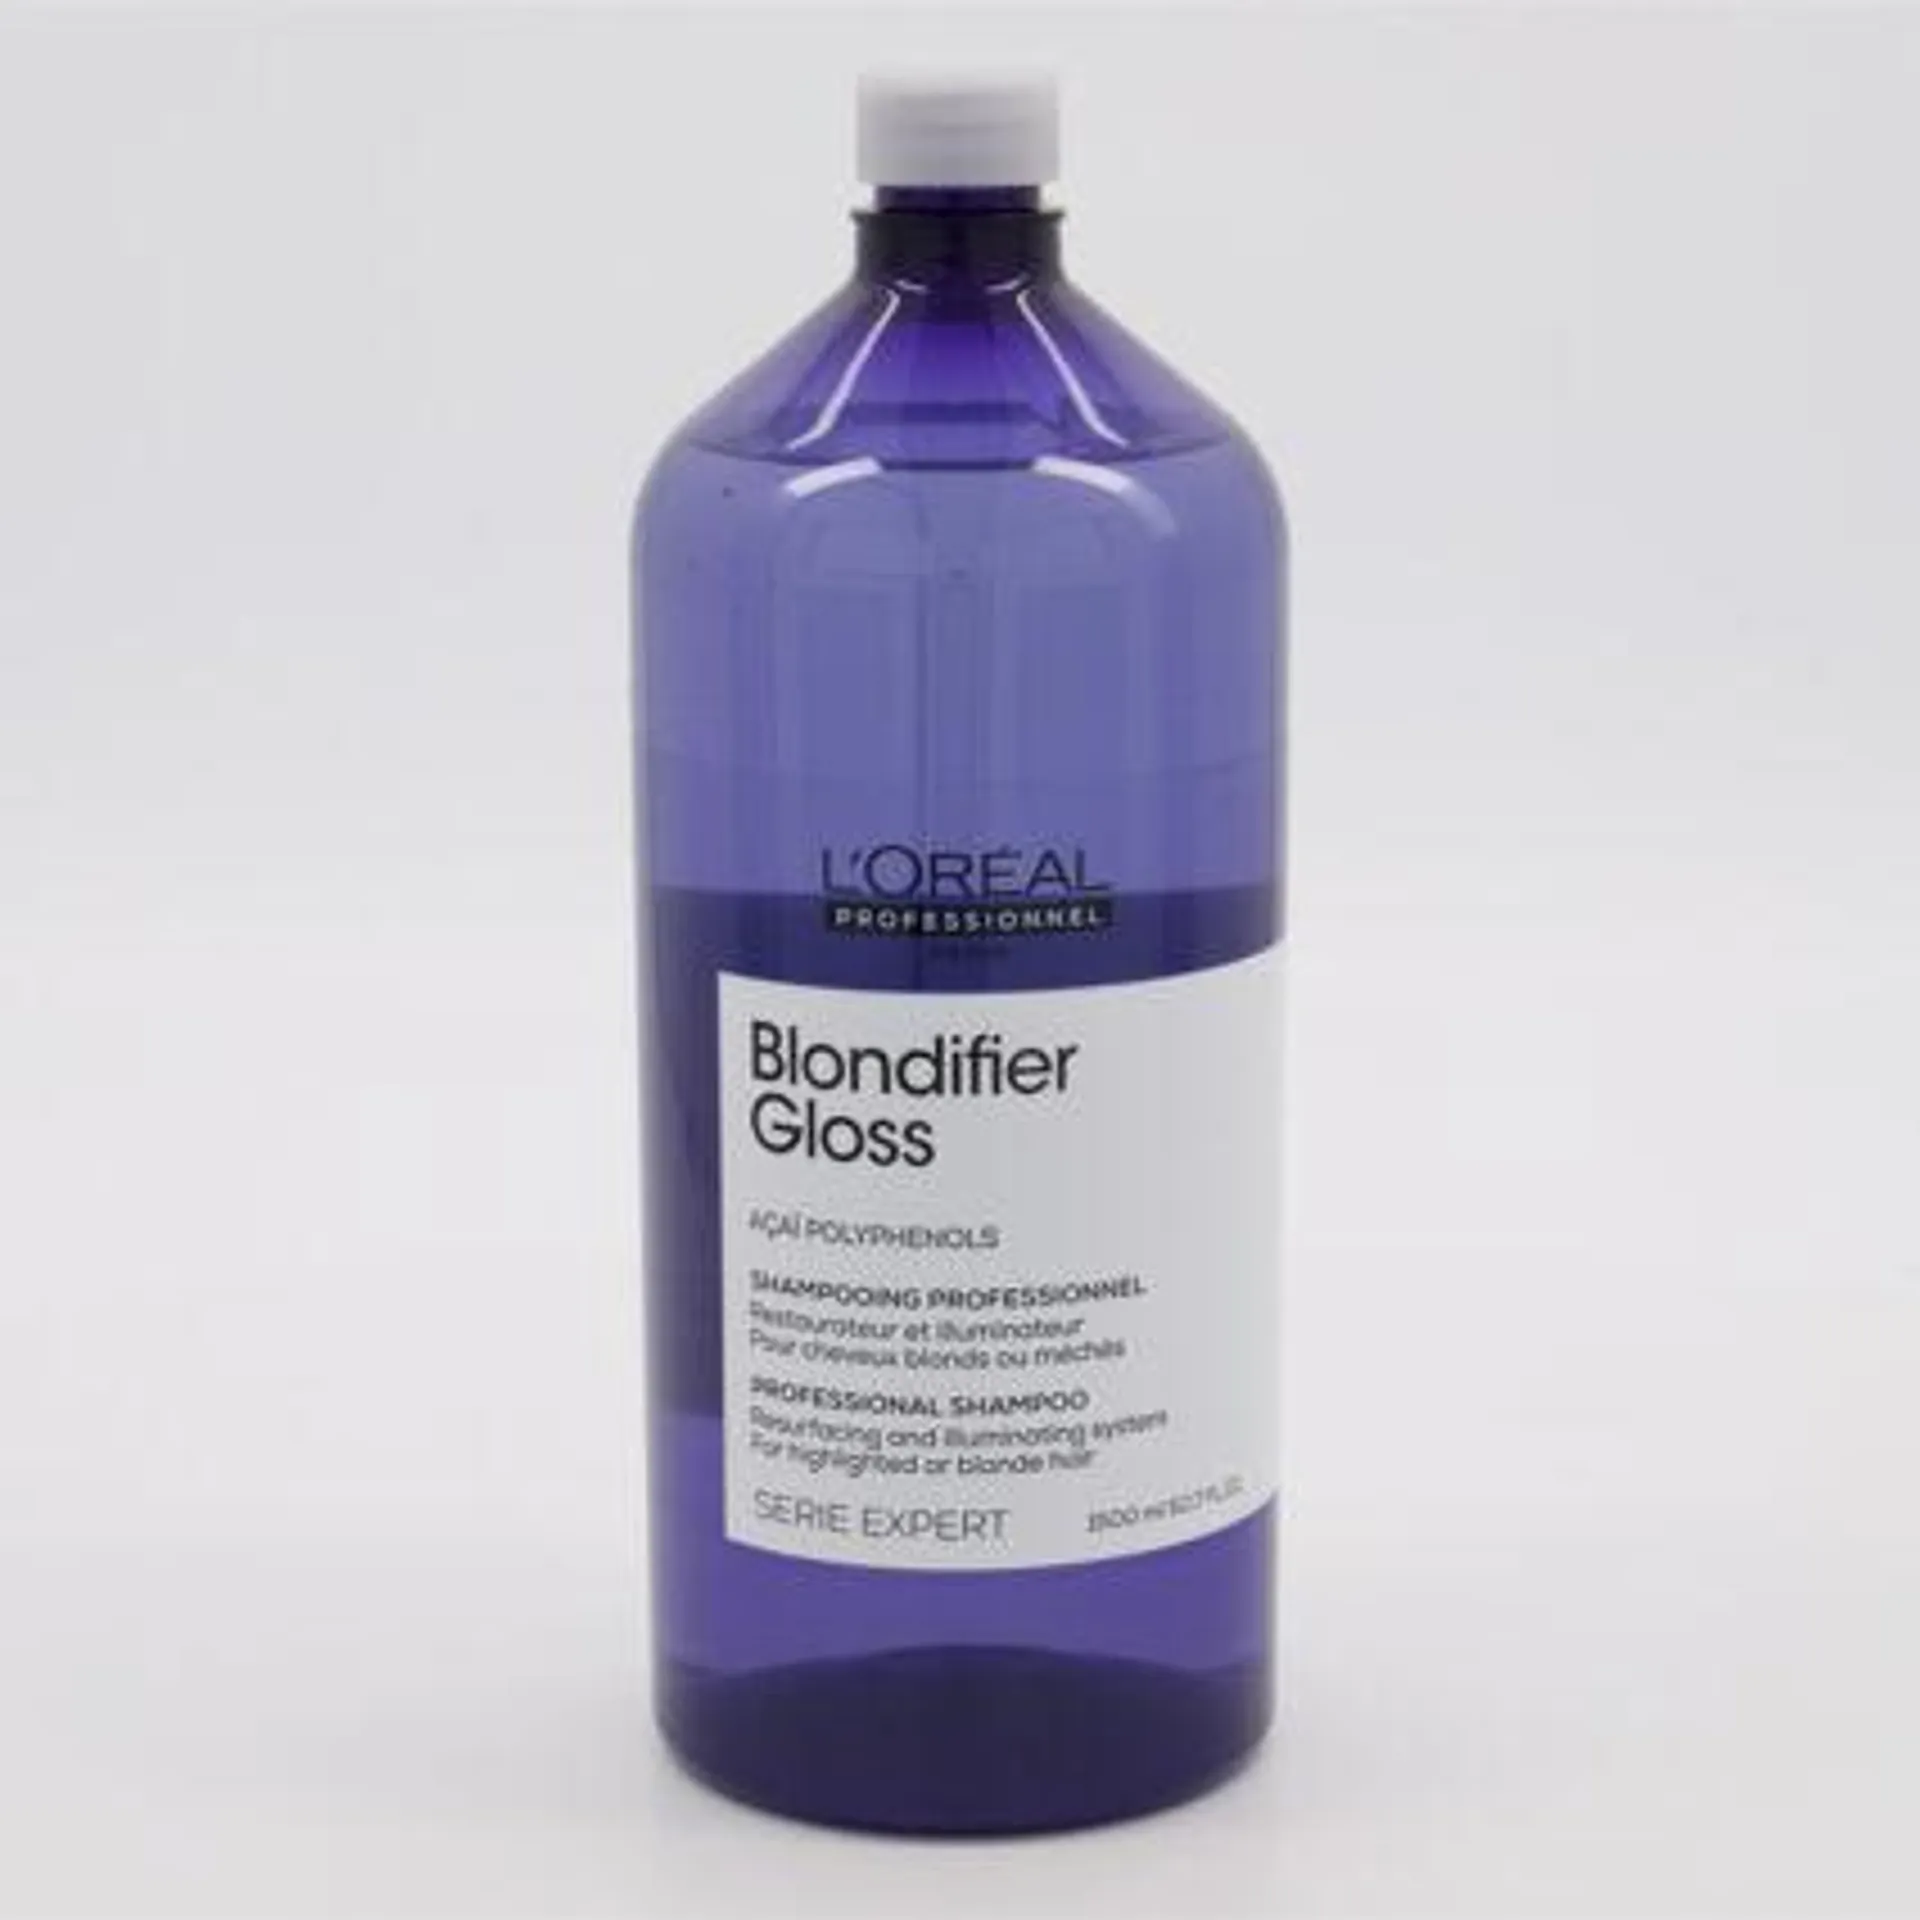 Bondifier Gloss Professional Shampoo 1.5L